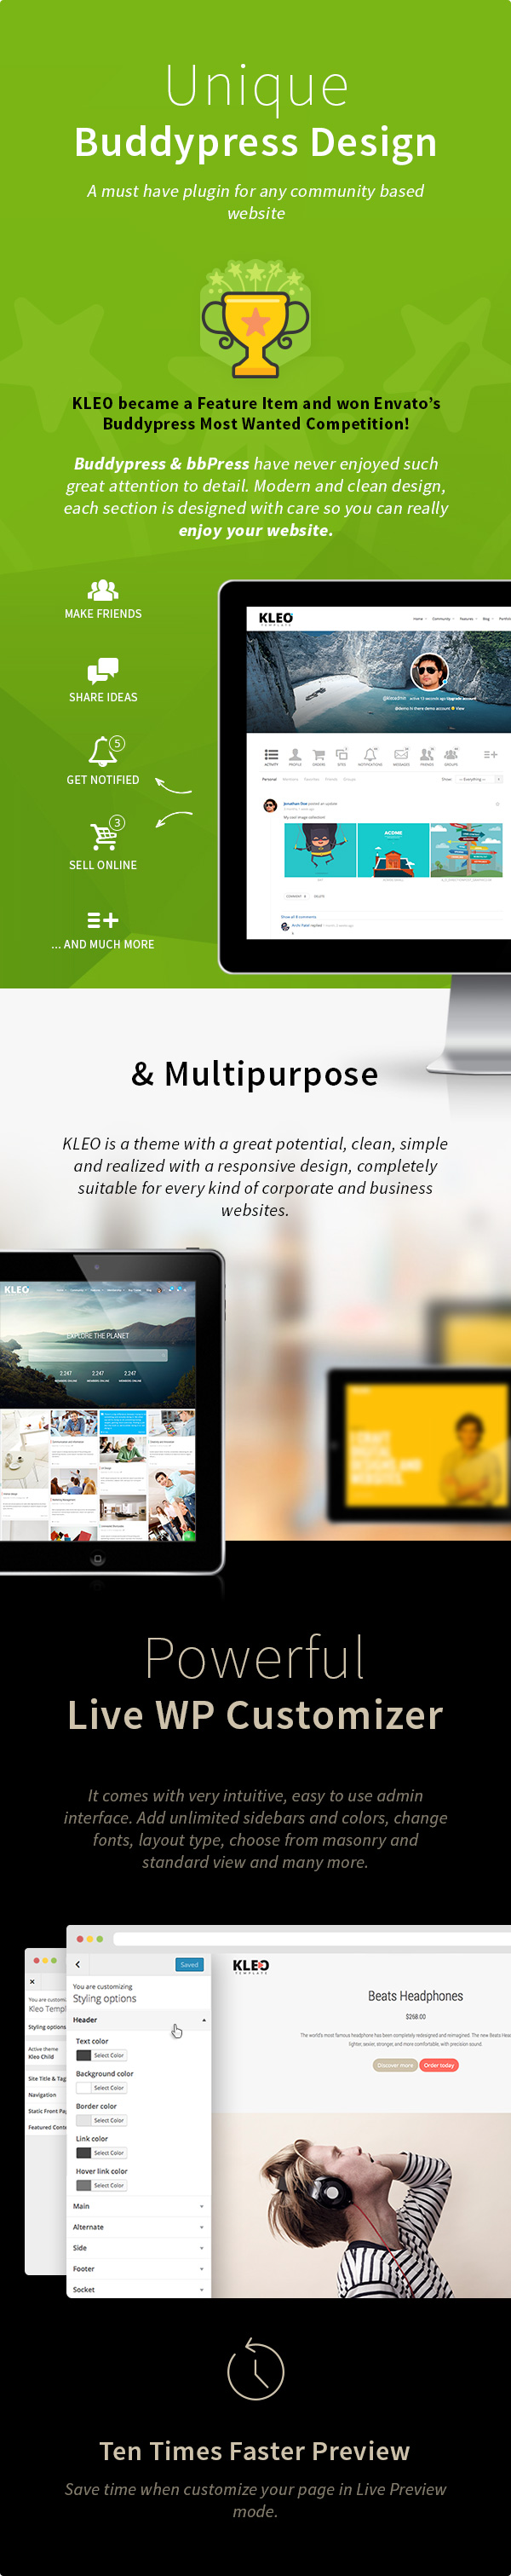 KLEO - BuddyPress is focused on the community, multi-purpose Theme - No. 8